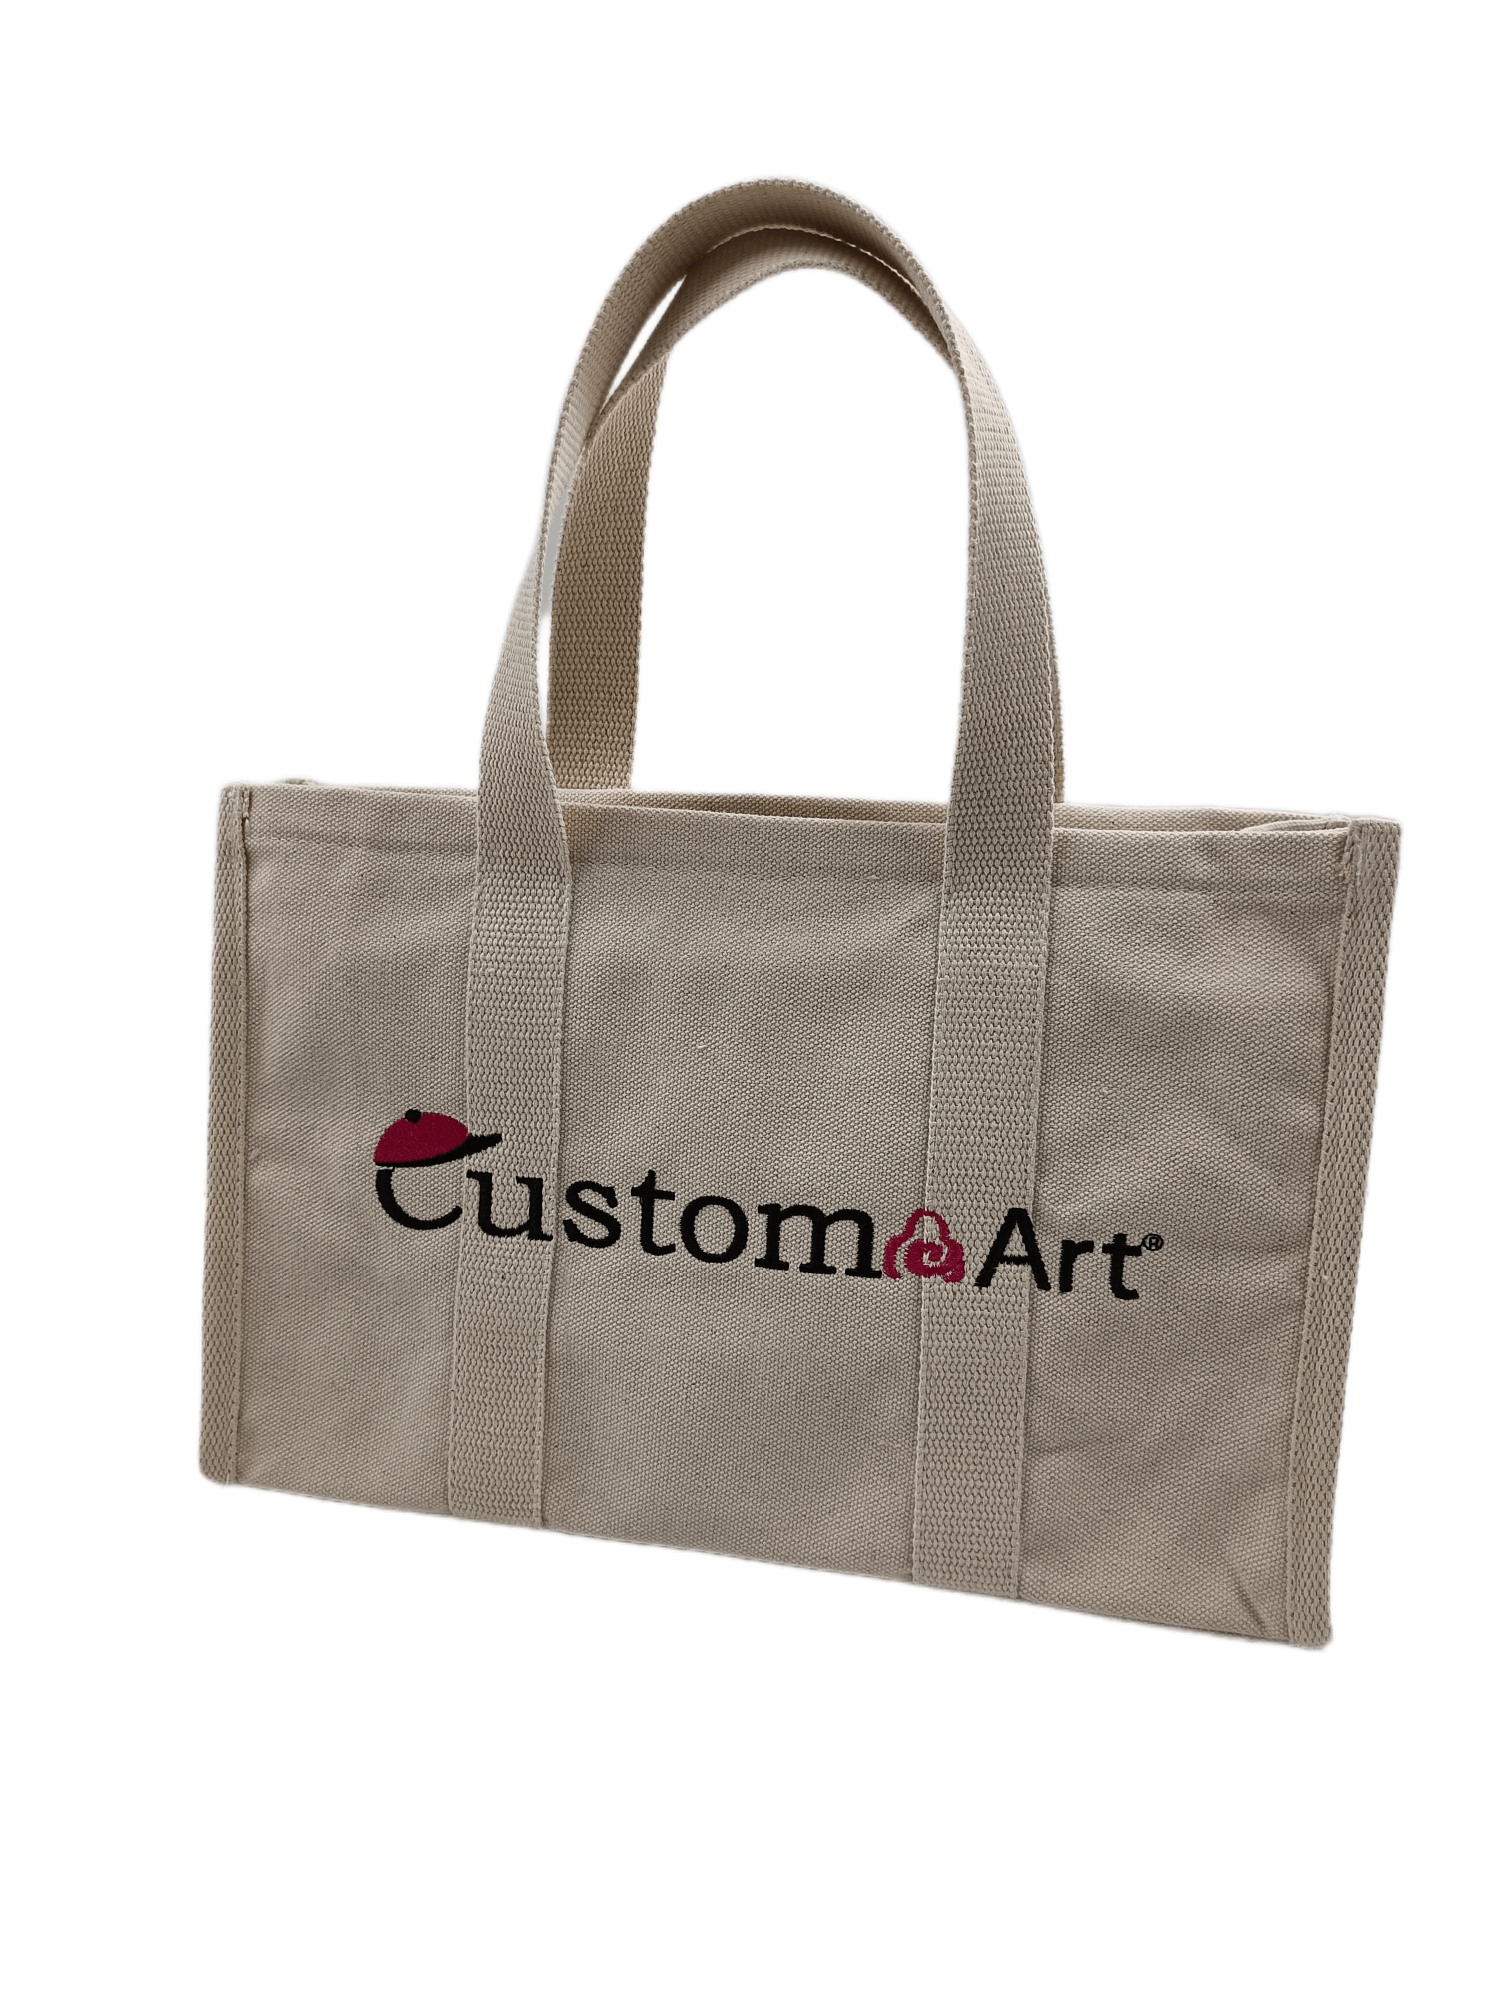 CUSTOM ART- #cosmetic bag #gift bag #canvas bag tote  product video